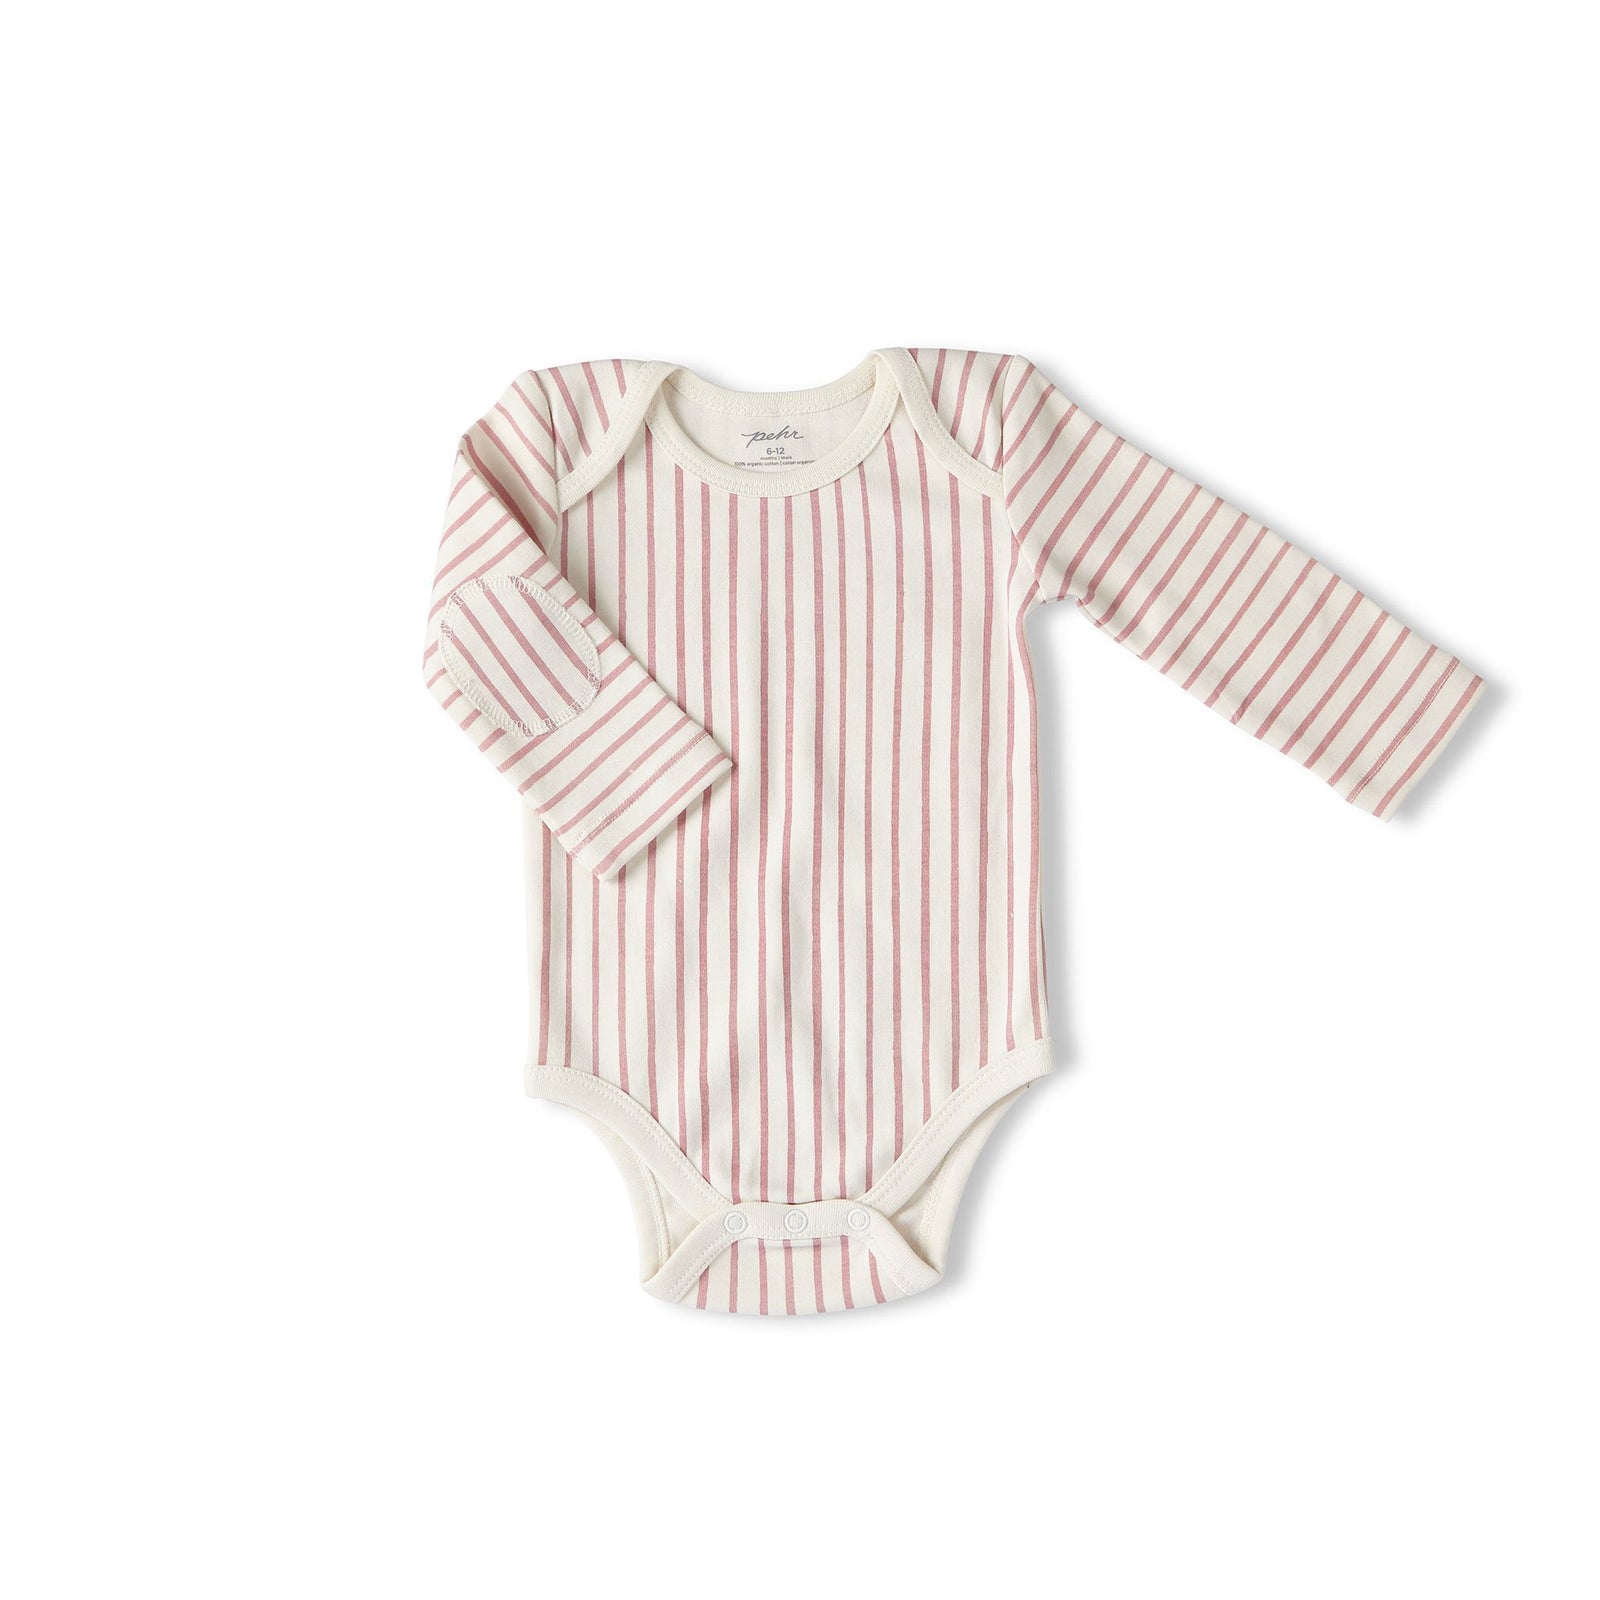 Pehr Stripes Away Dark Pink Organic One-Piece, Long Sleeve. GOTS Certified Organic Cotton & Dyes. White with dark pink stripes, long sleeve, button closure at bottom.